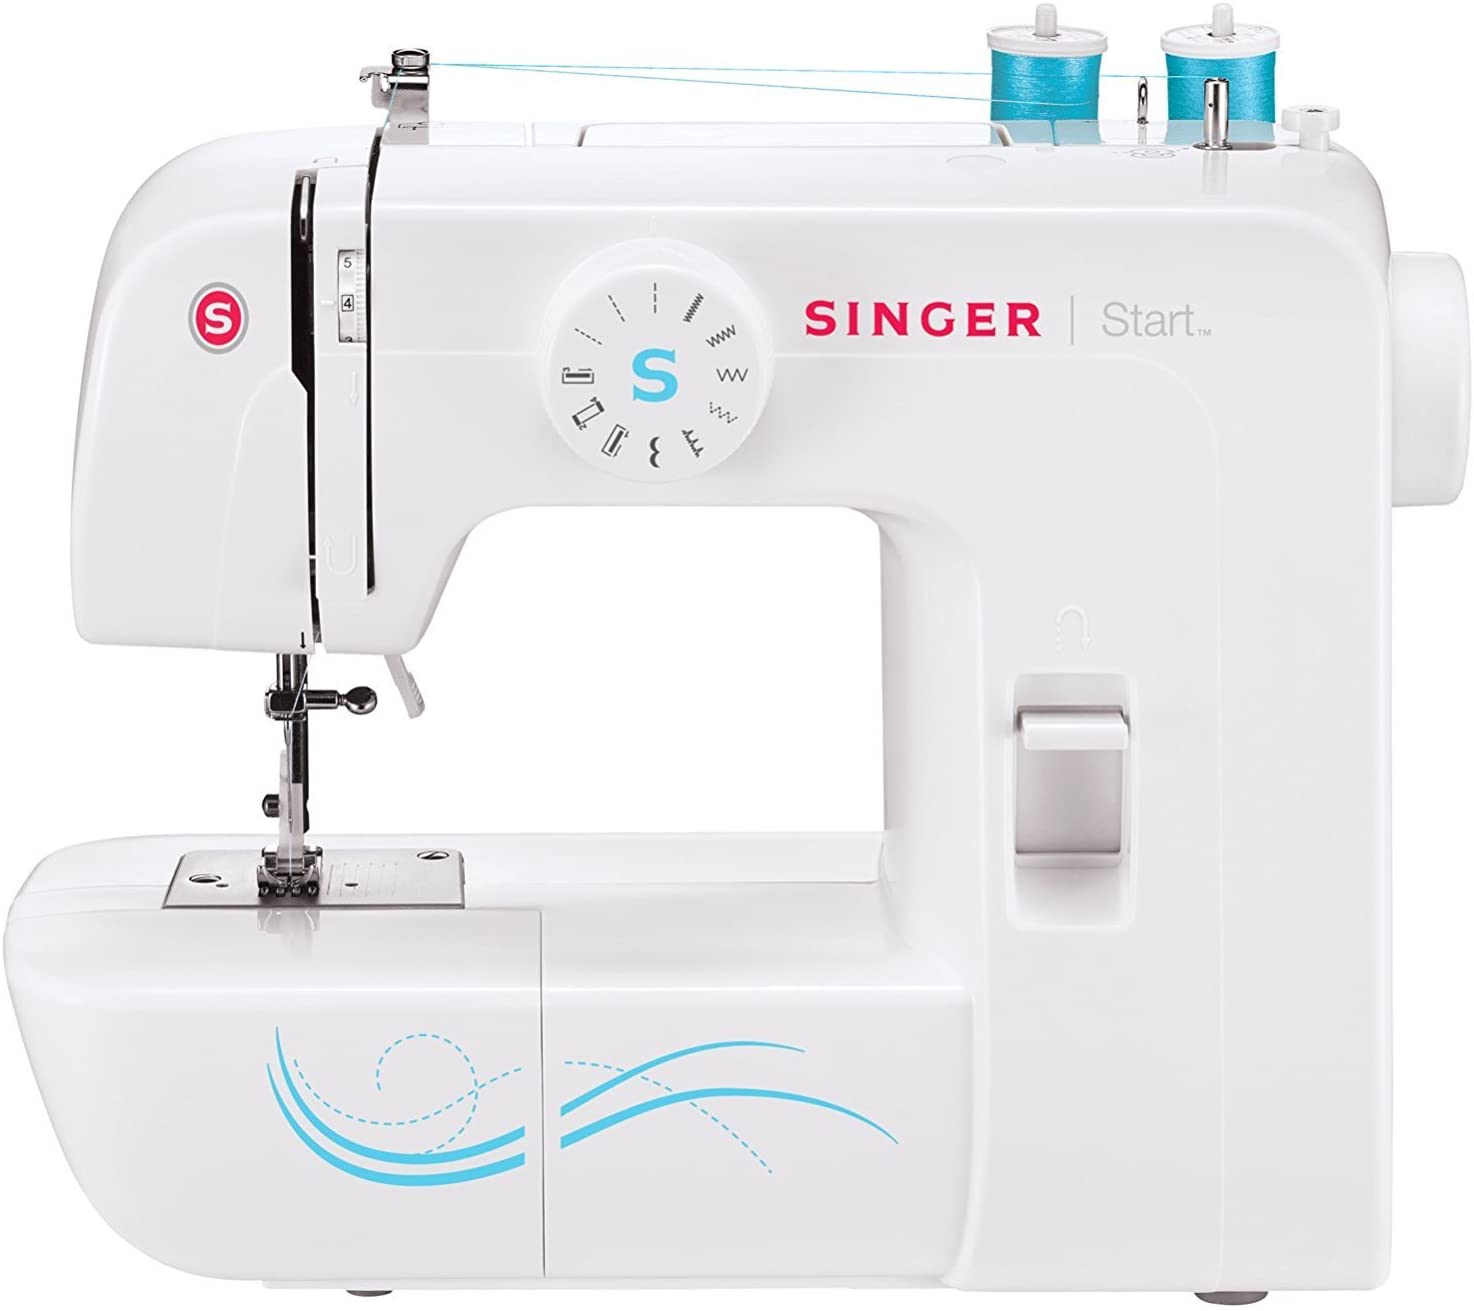 singer starts 1304 sewing machine isolated on white background